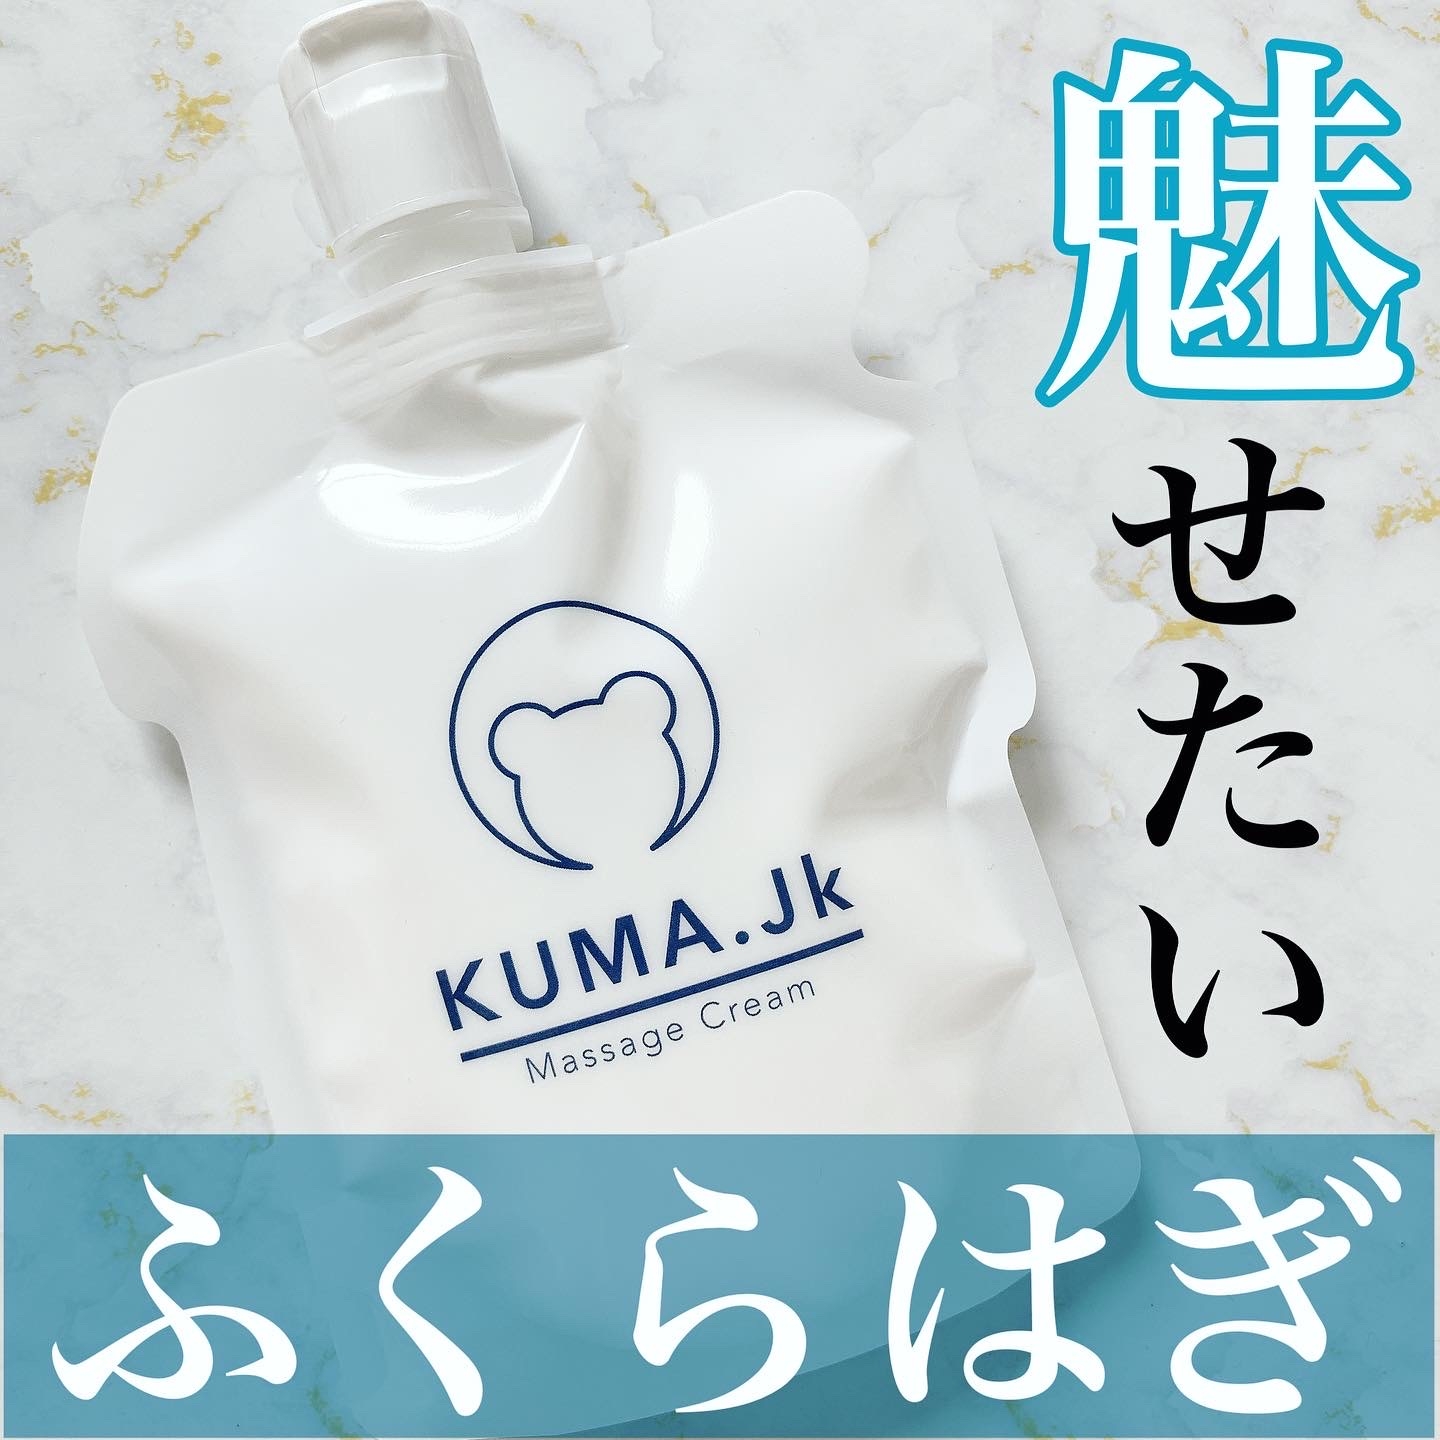 KUMA.jk(クマドットジェーケー) JKふくらはぎ用マッサージクリームに関するまみやこさんの口コミ画像1